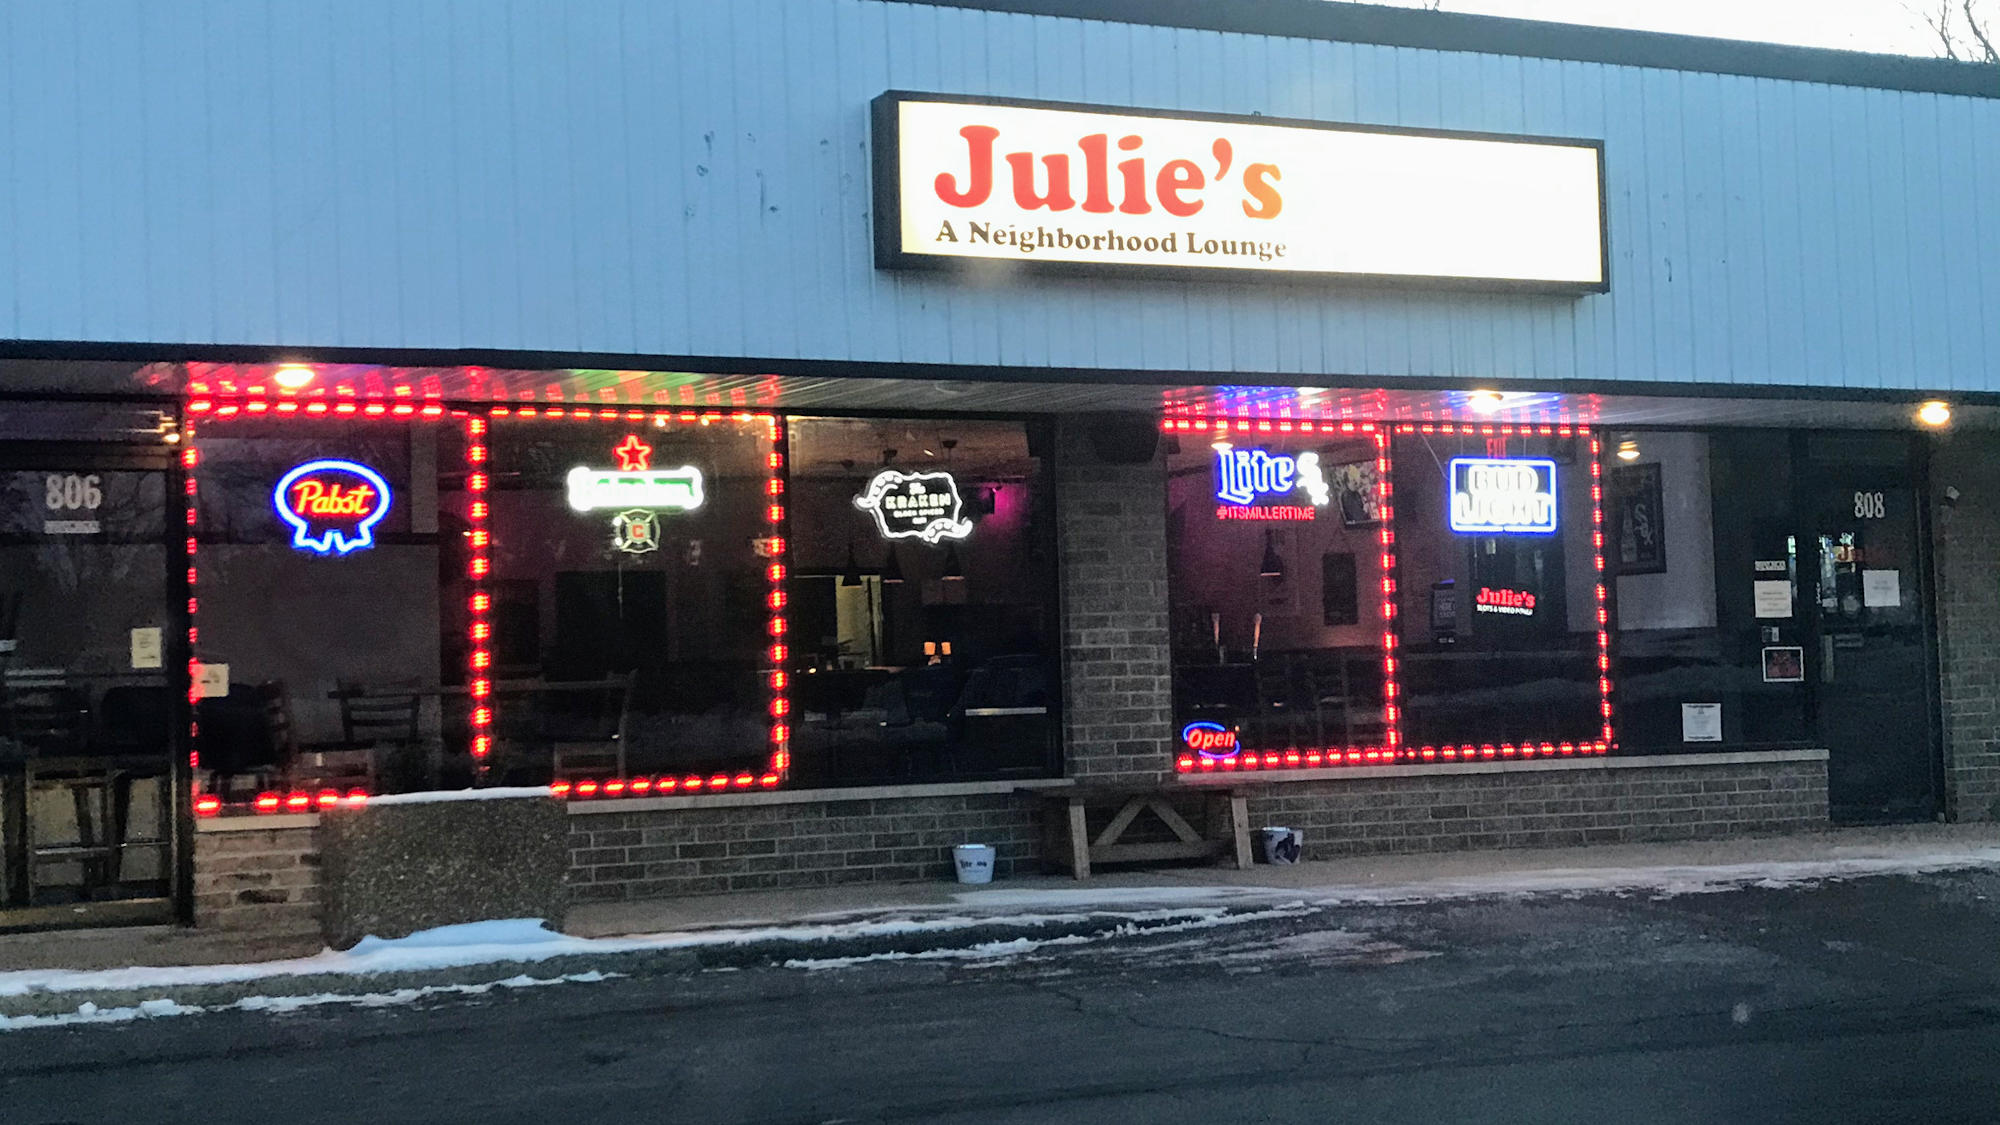 Julie’s Neighborhood Lounge